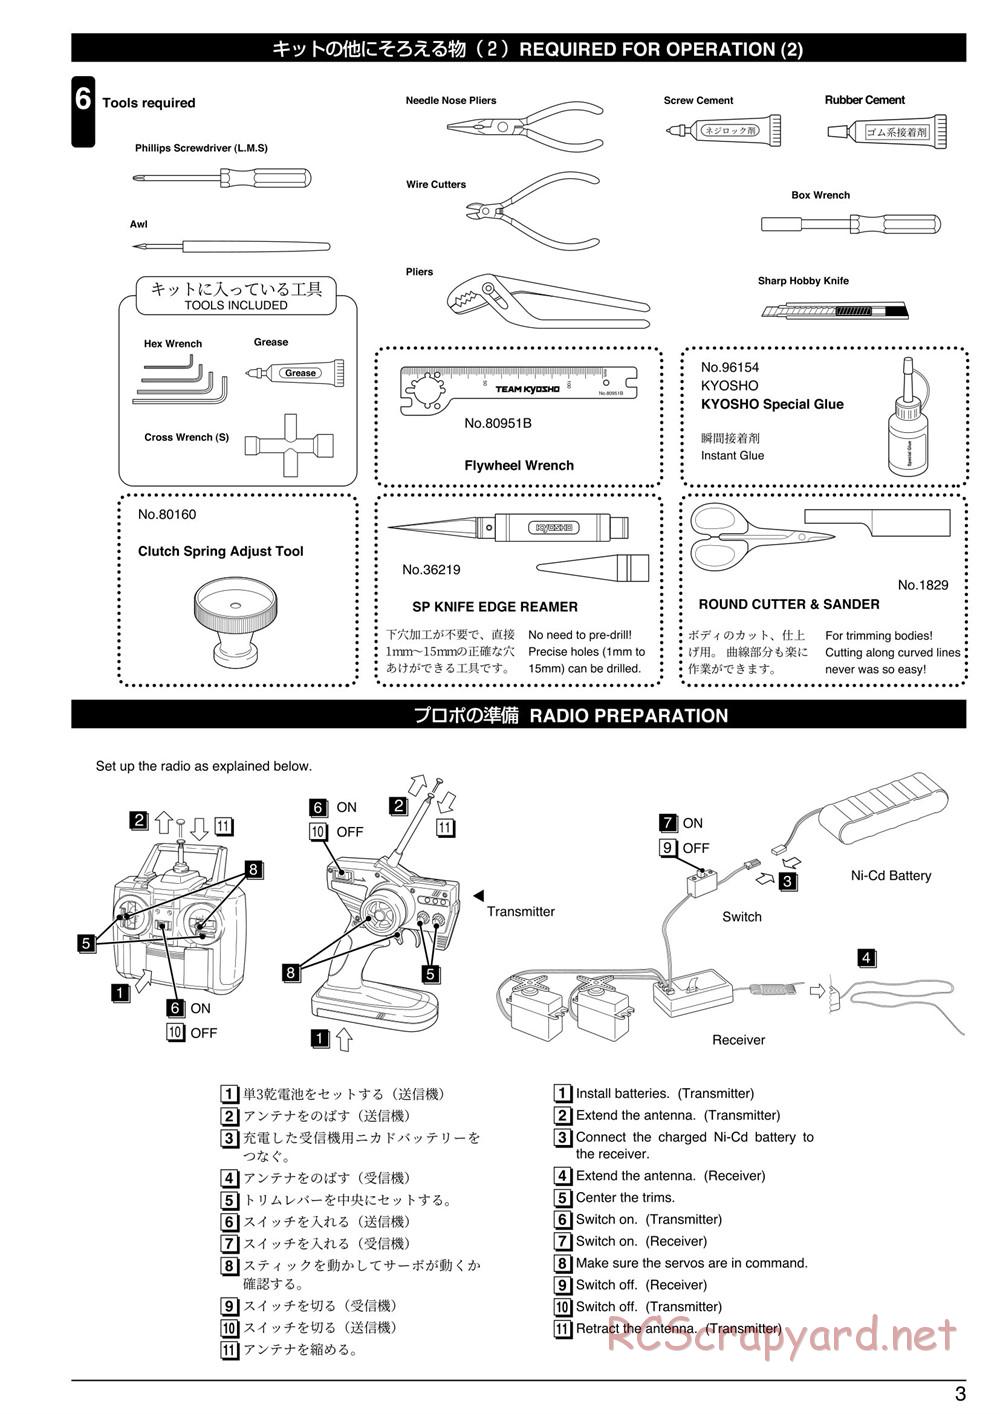 Kyosho - V-One RRR Evo - Manual - Page 3